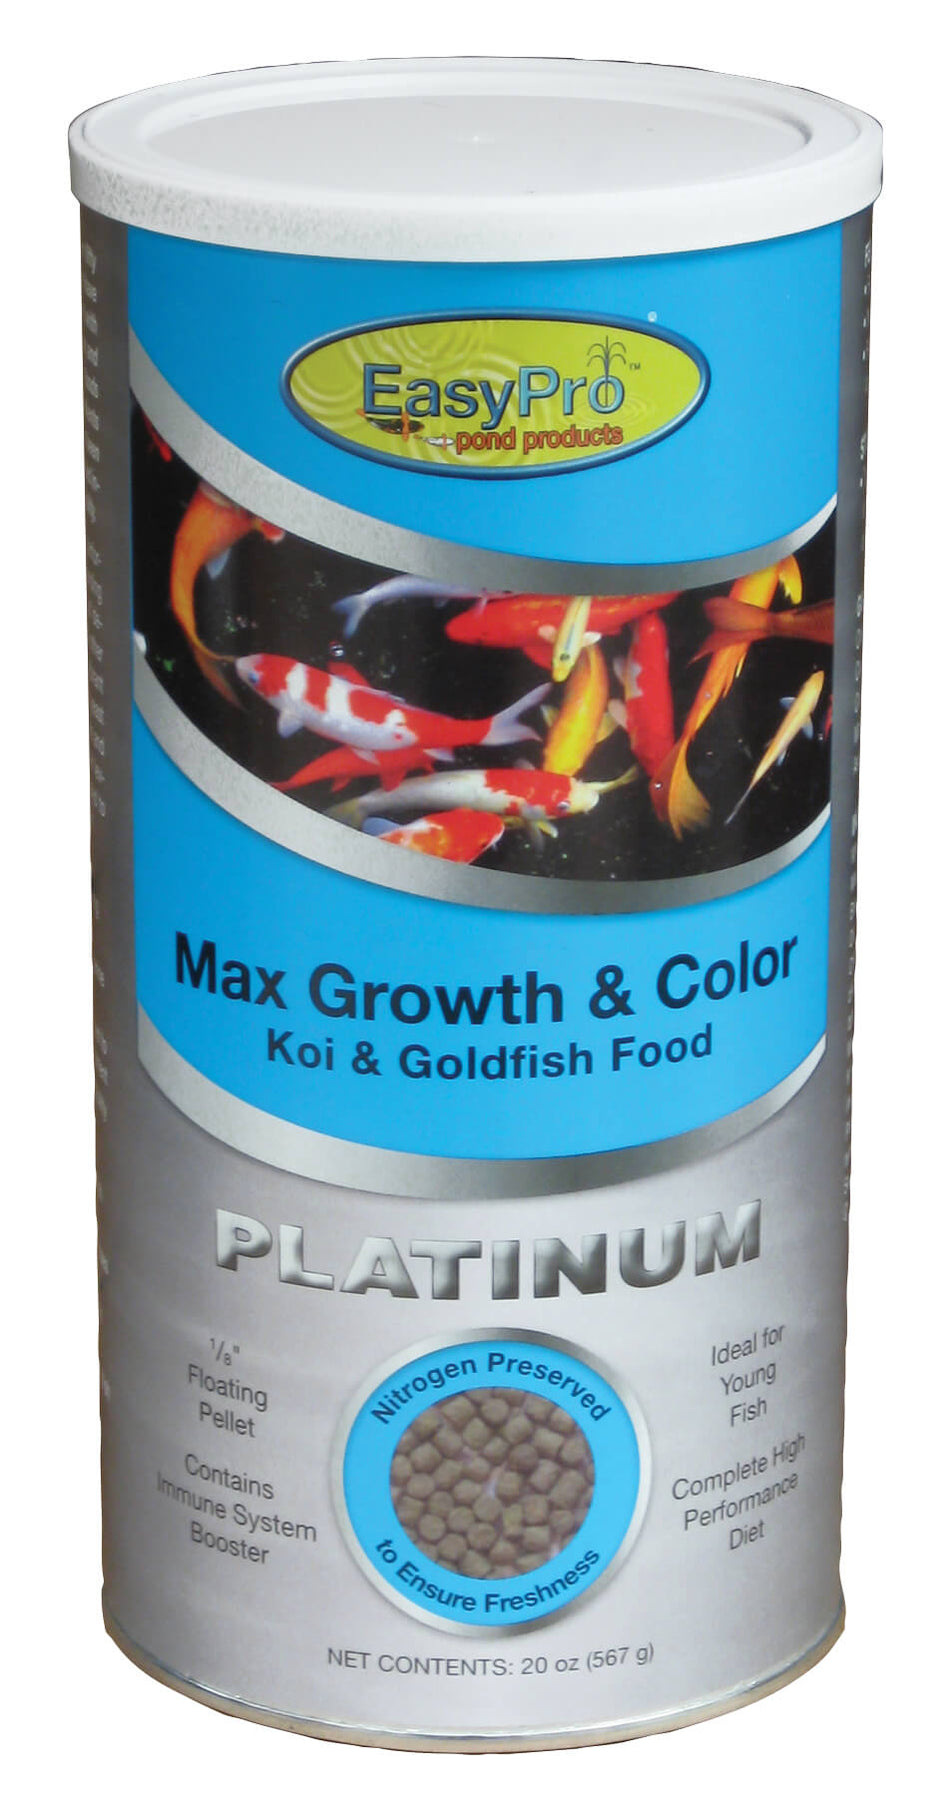 Easy Pro Platinum Koi & Goldfish Food – Max Growth & Color